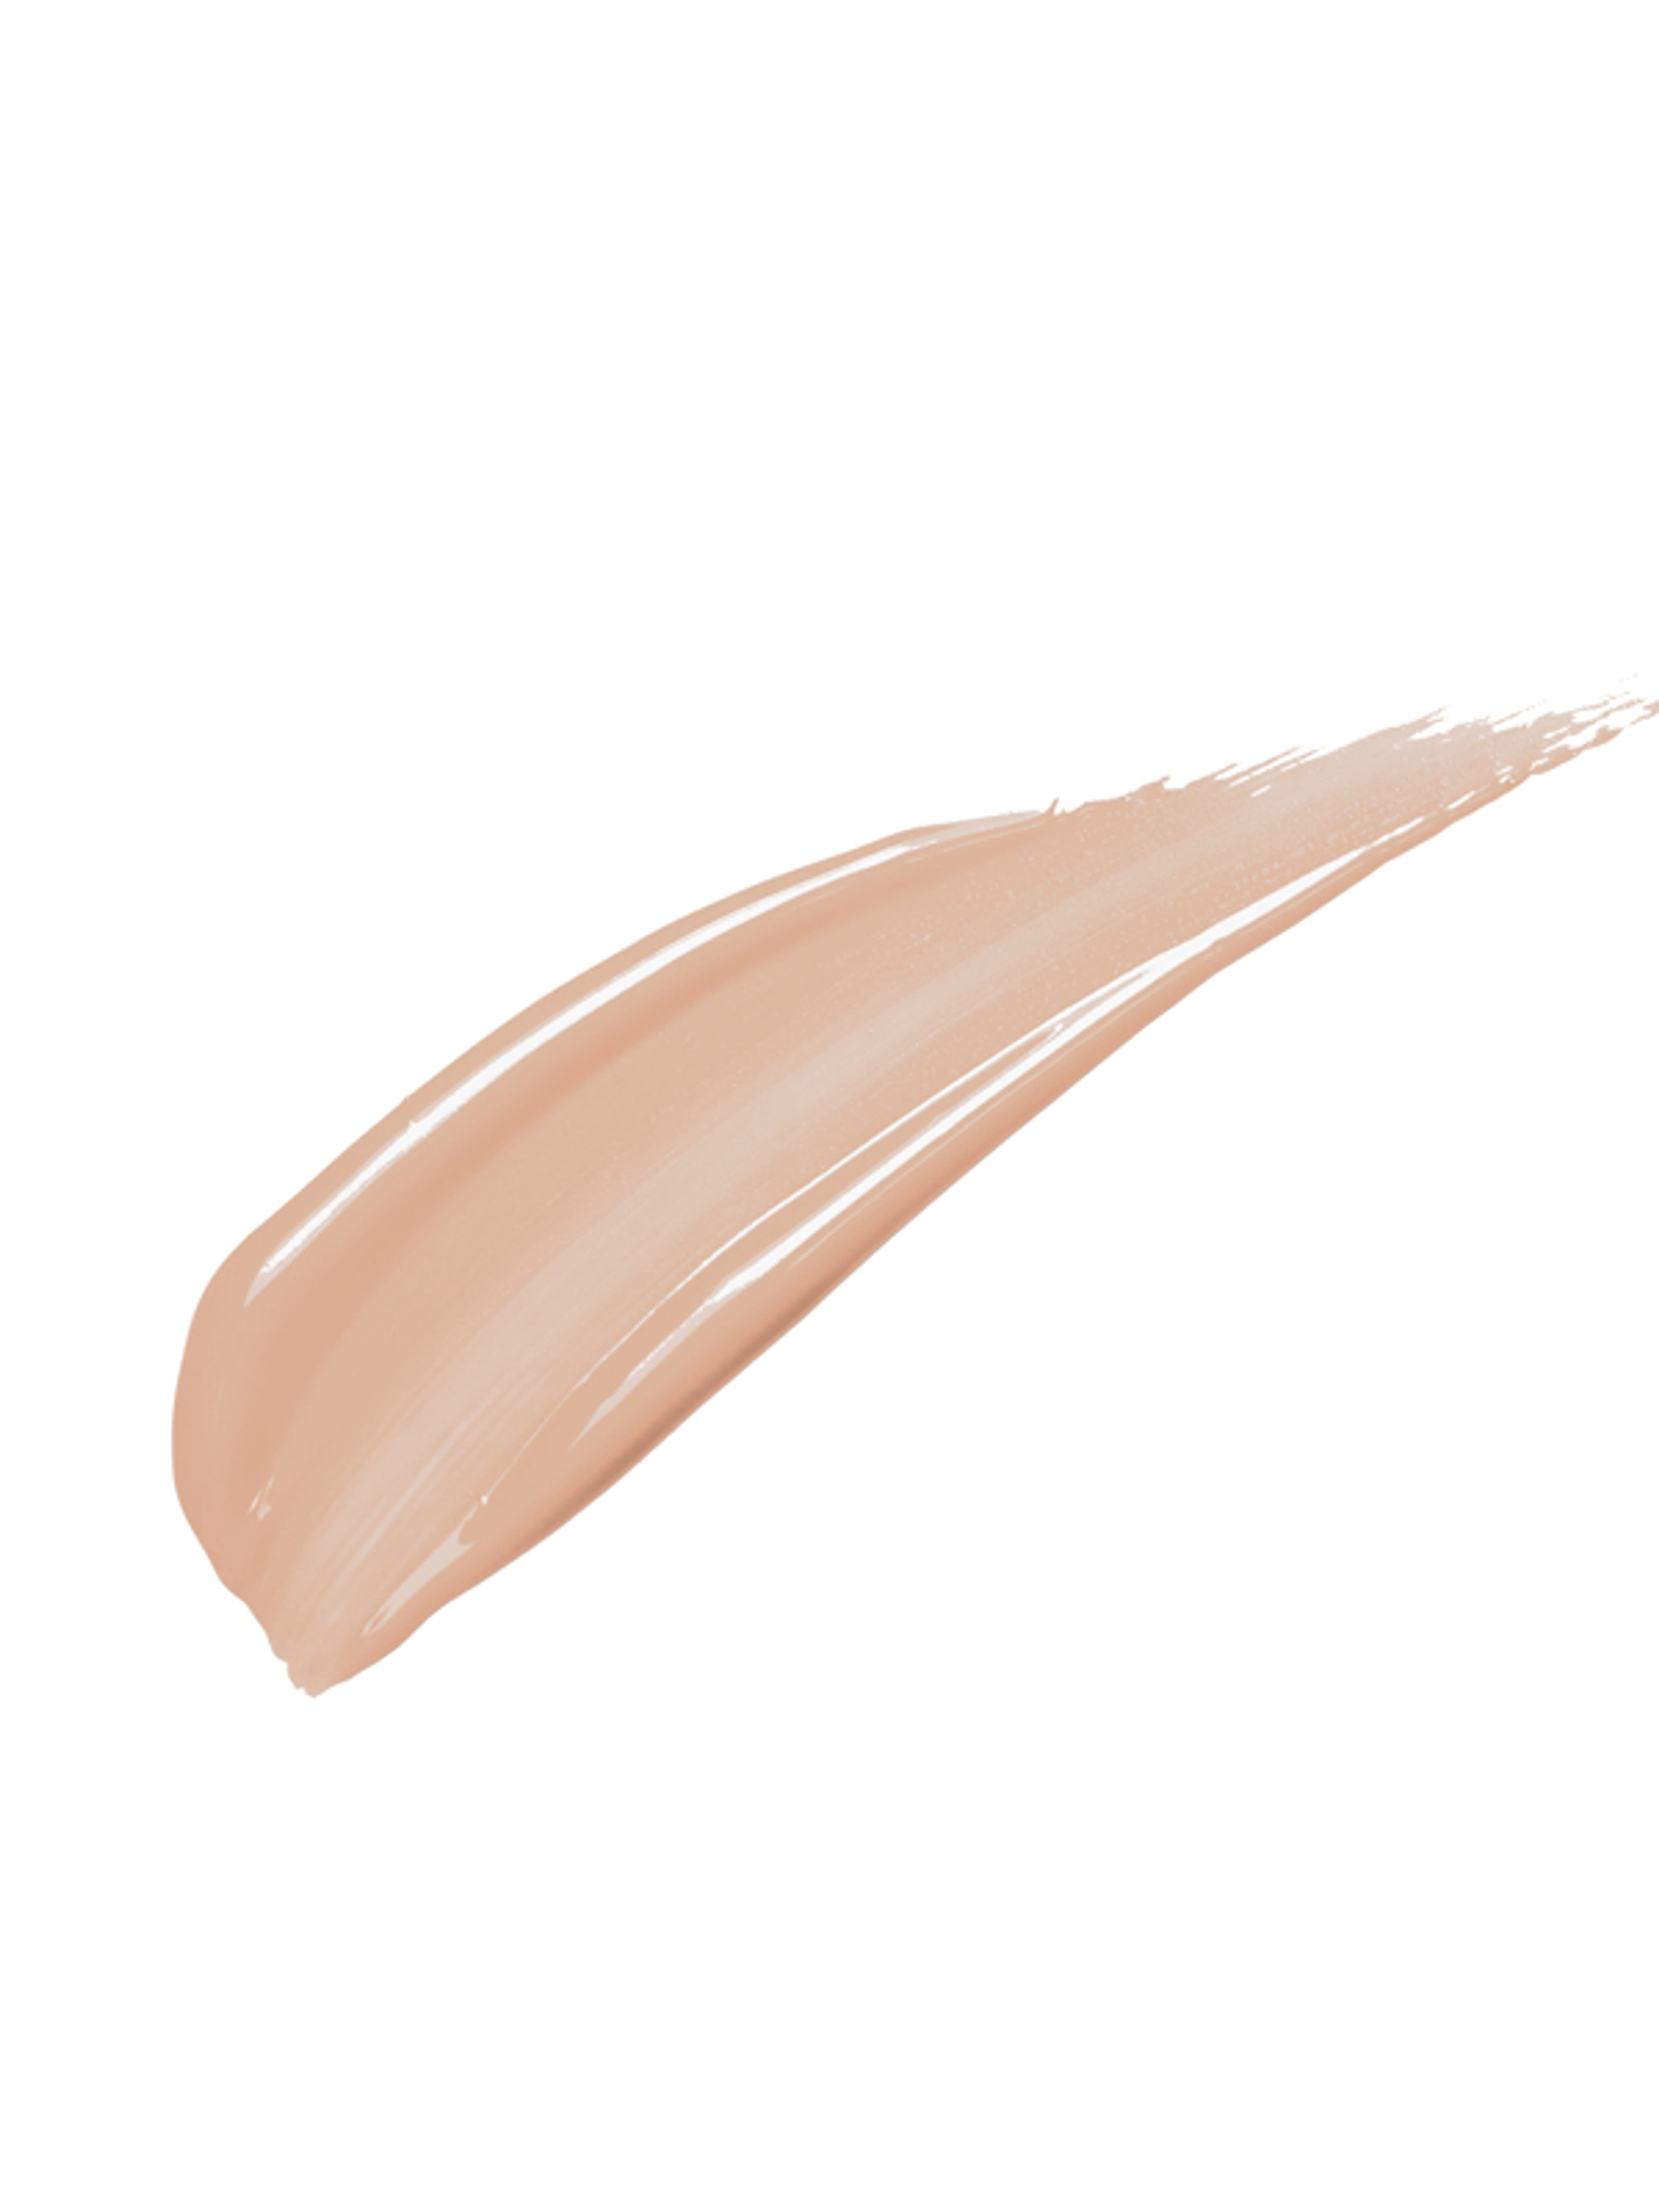 L'Oréal Paris True Match Nude színezett szérum /3-4 - 1 db-2